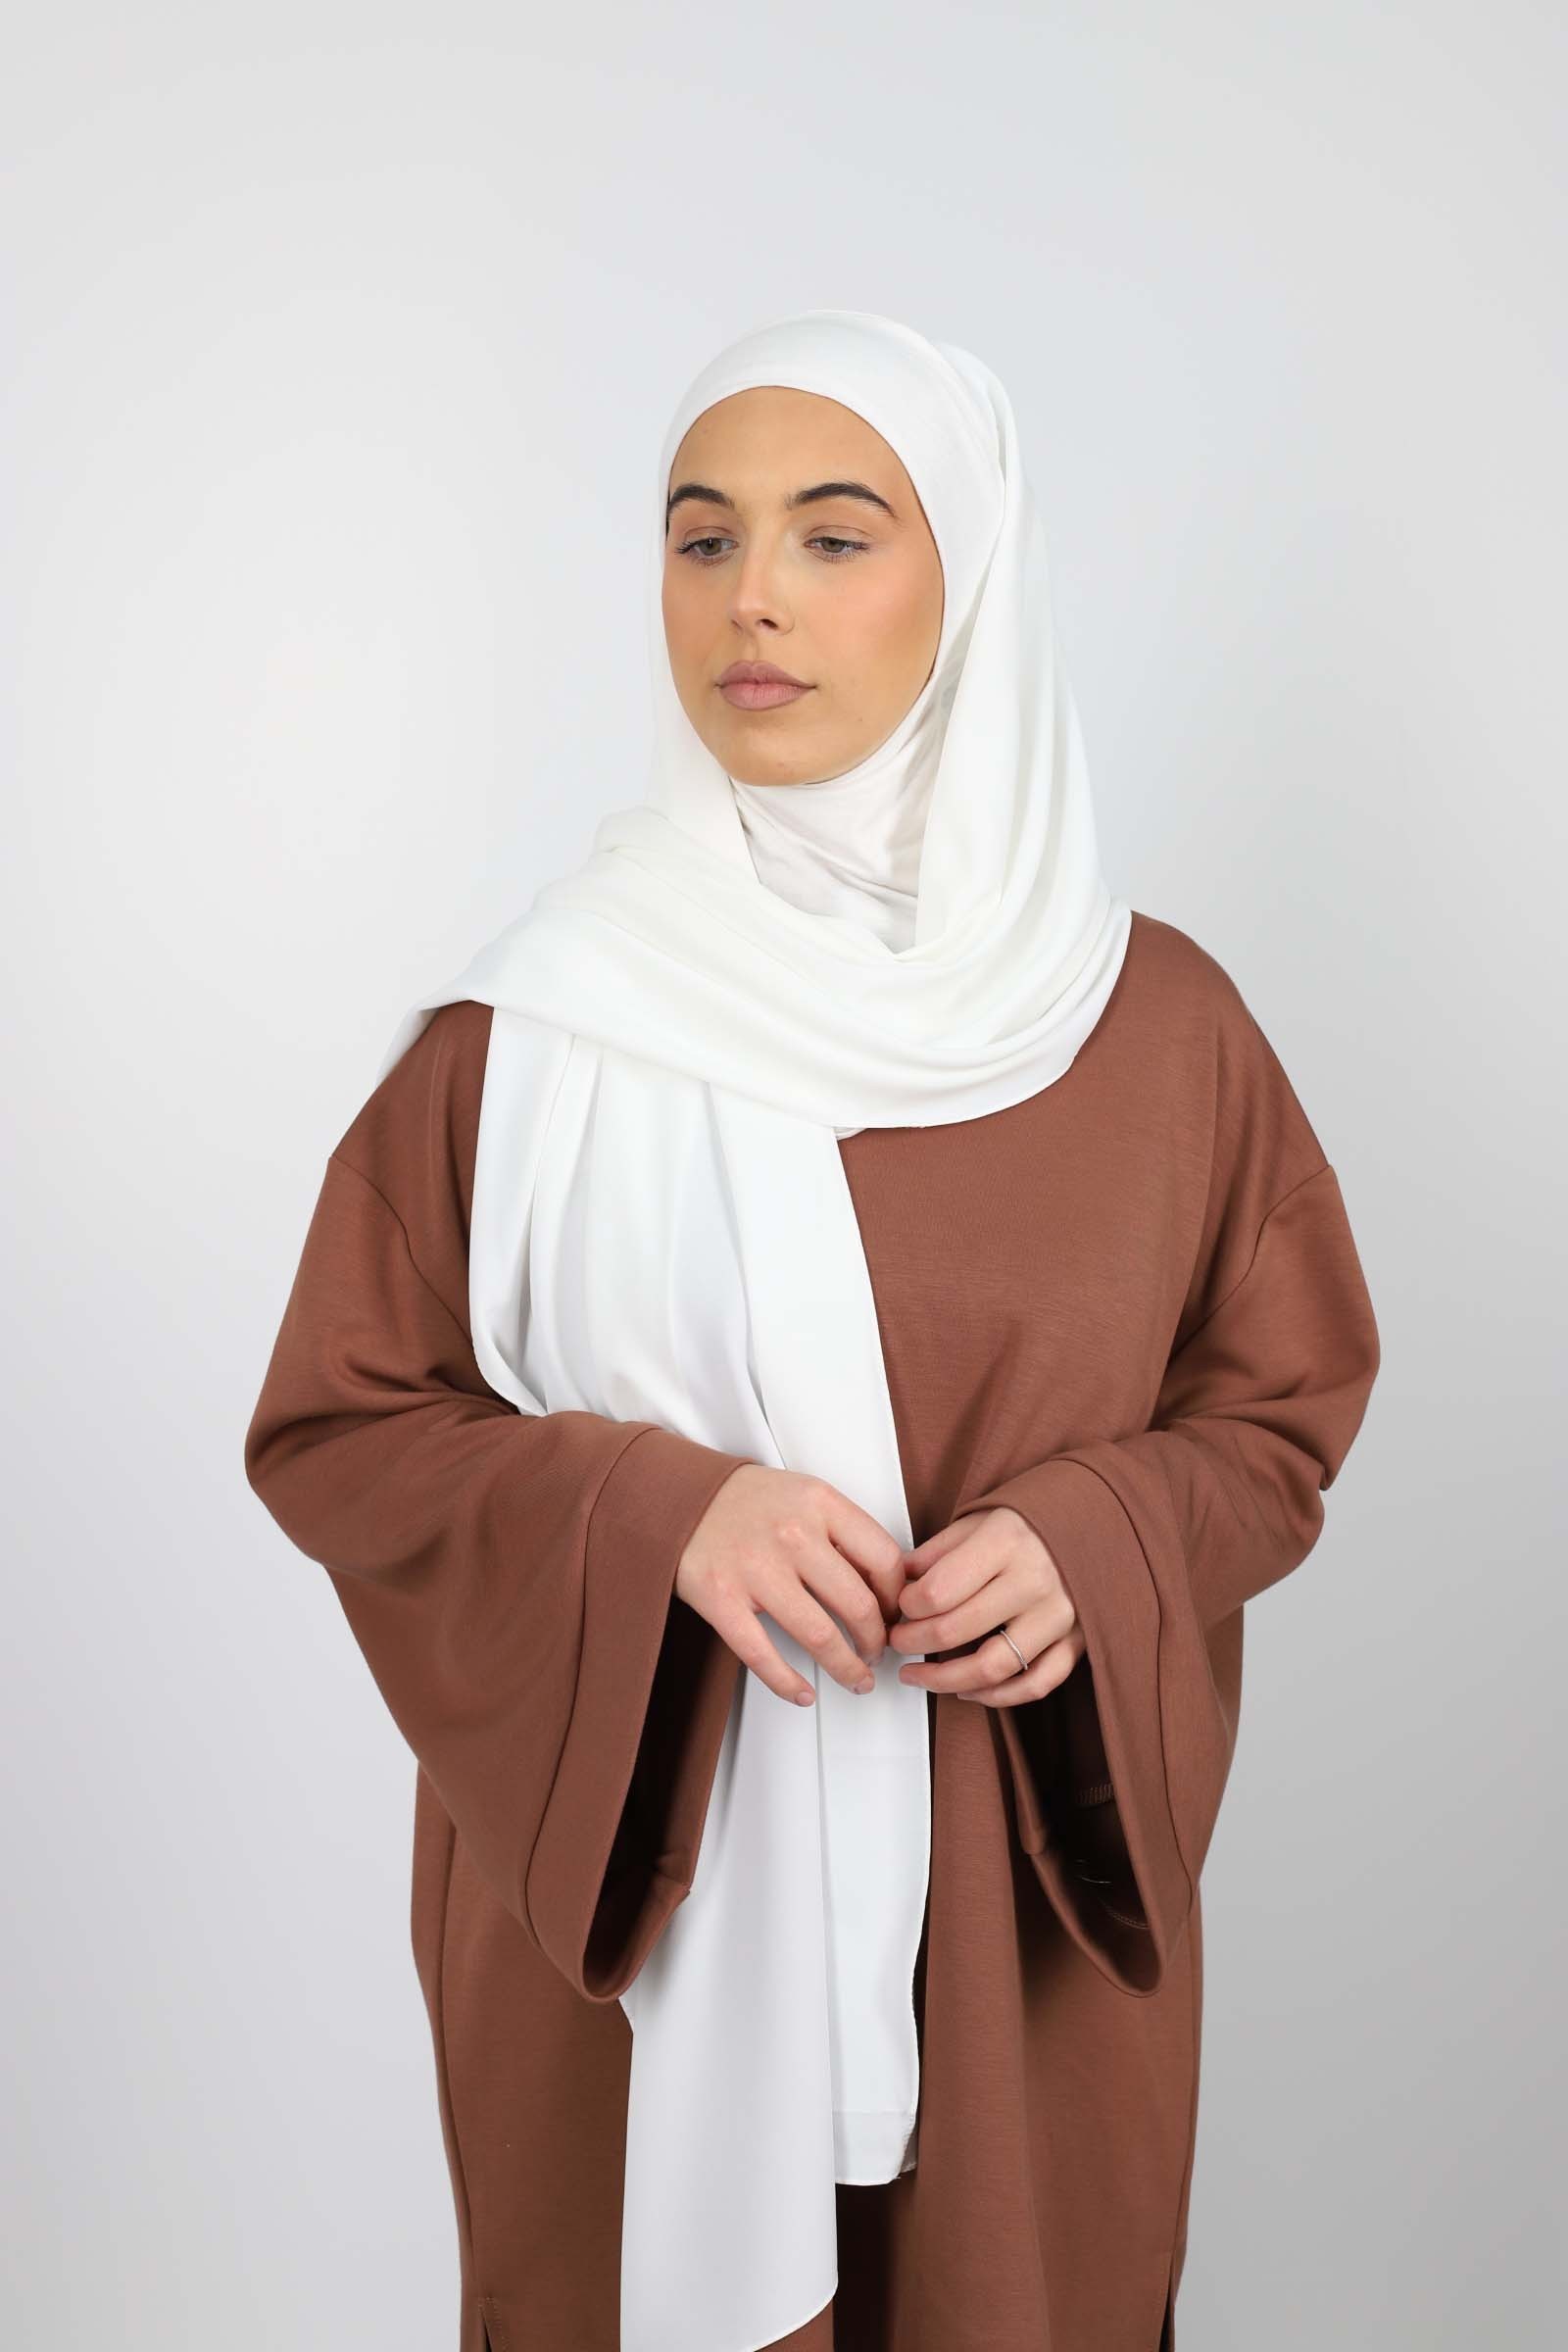 Hijab hood to put on